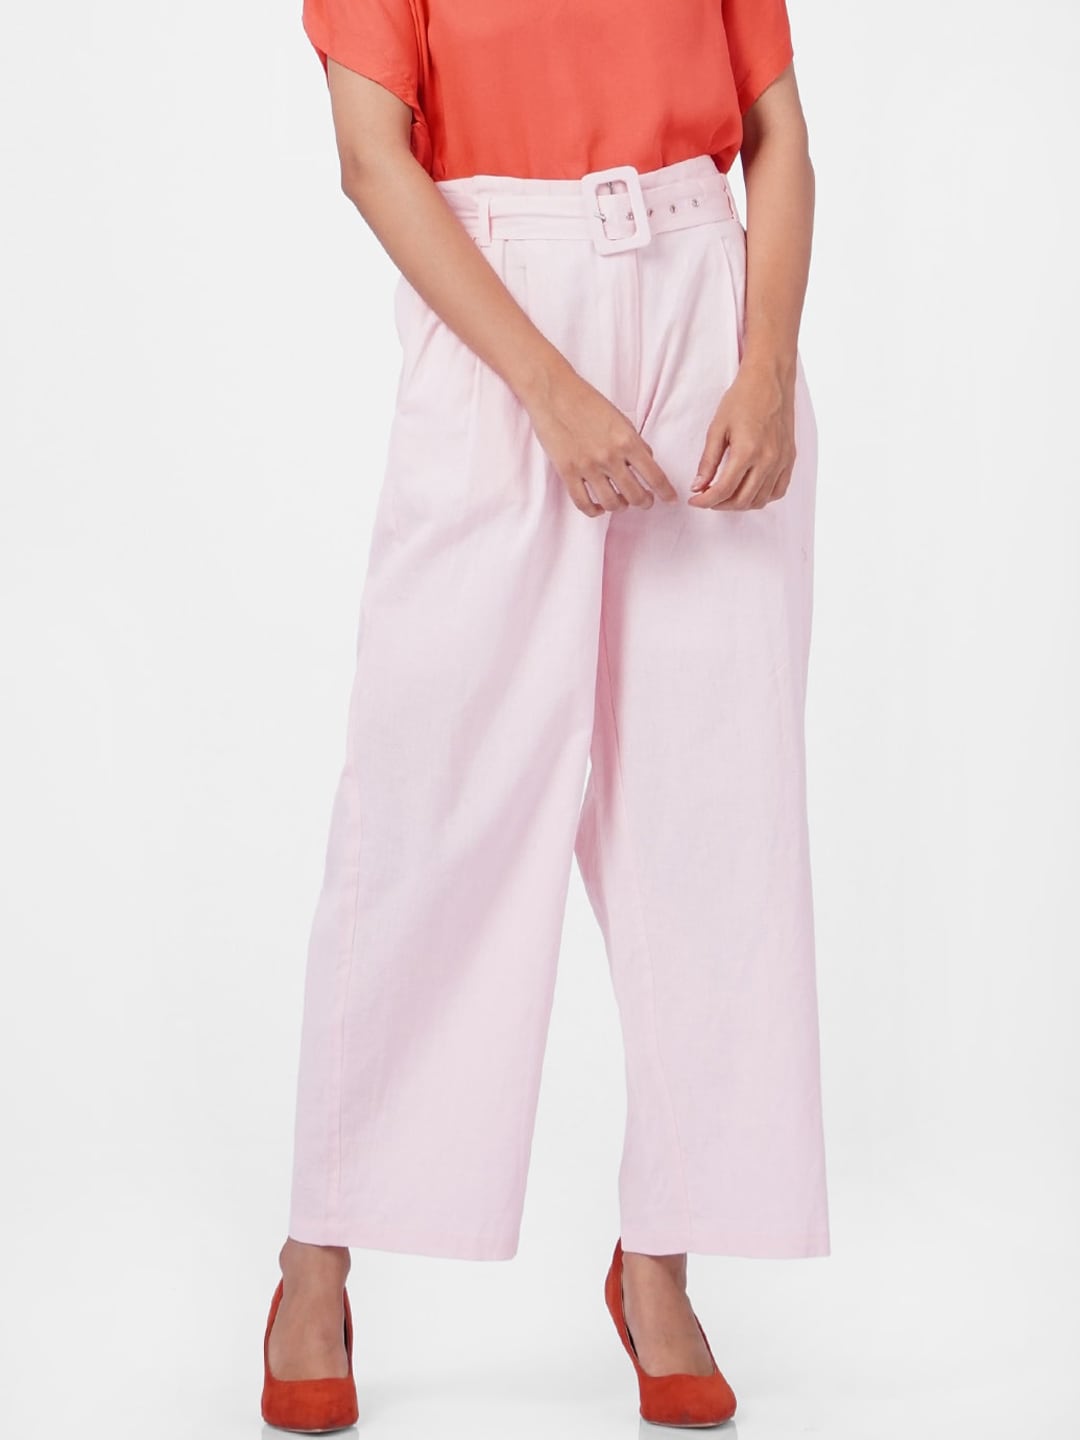 Vero Moda Women Pink Trousers Price in India